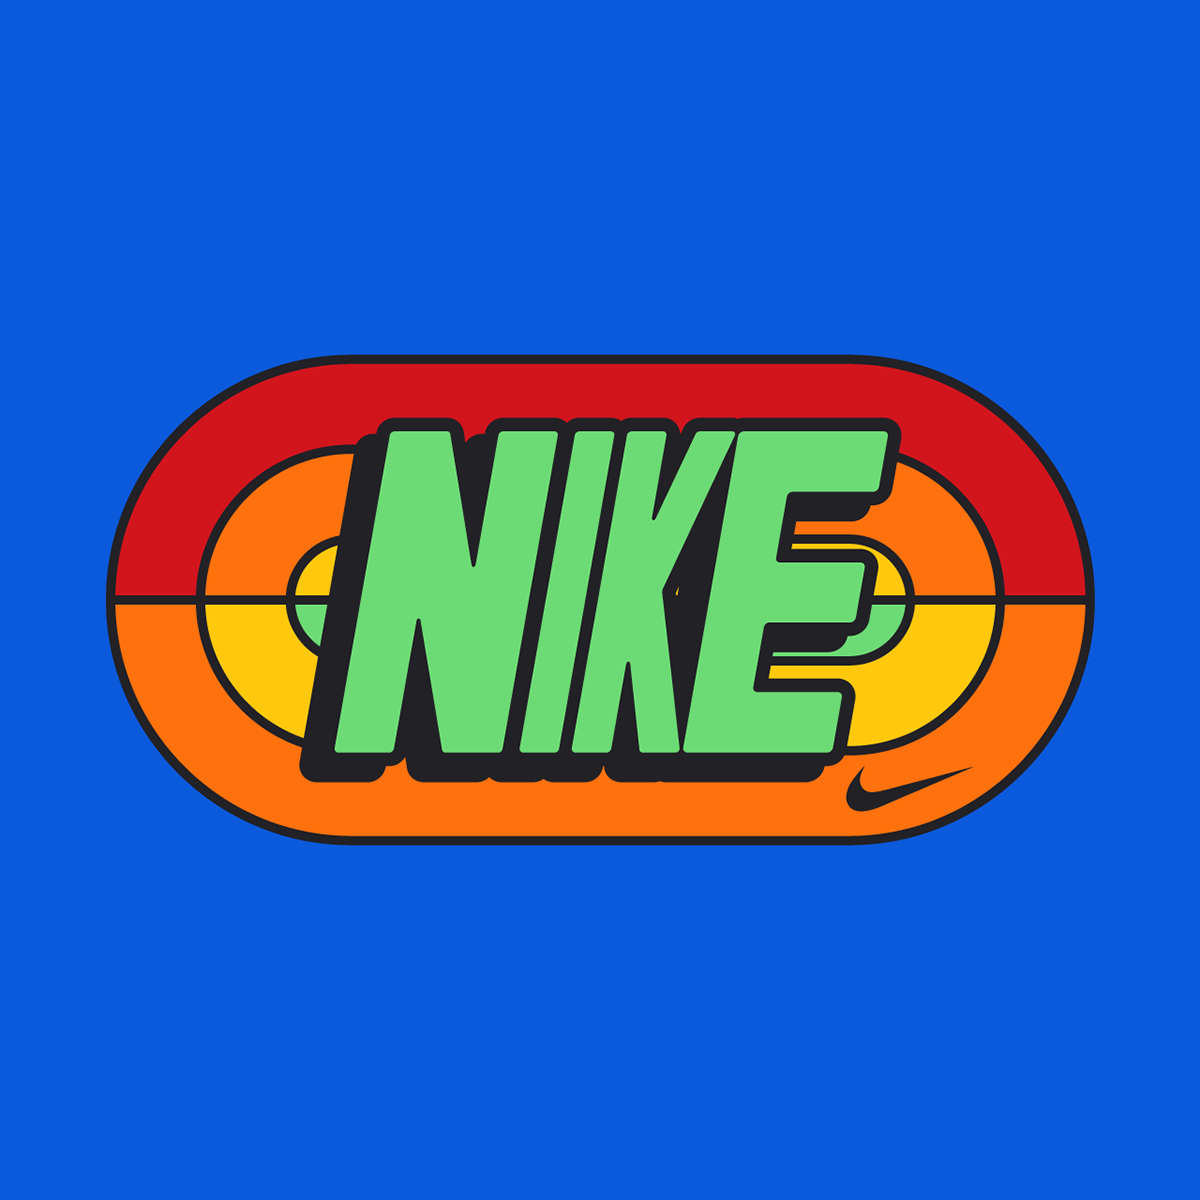 Nike Netflix 1984 george orwell nasa atari spotify the shining playstation LEGO Maythe4thbewithyou